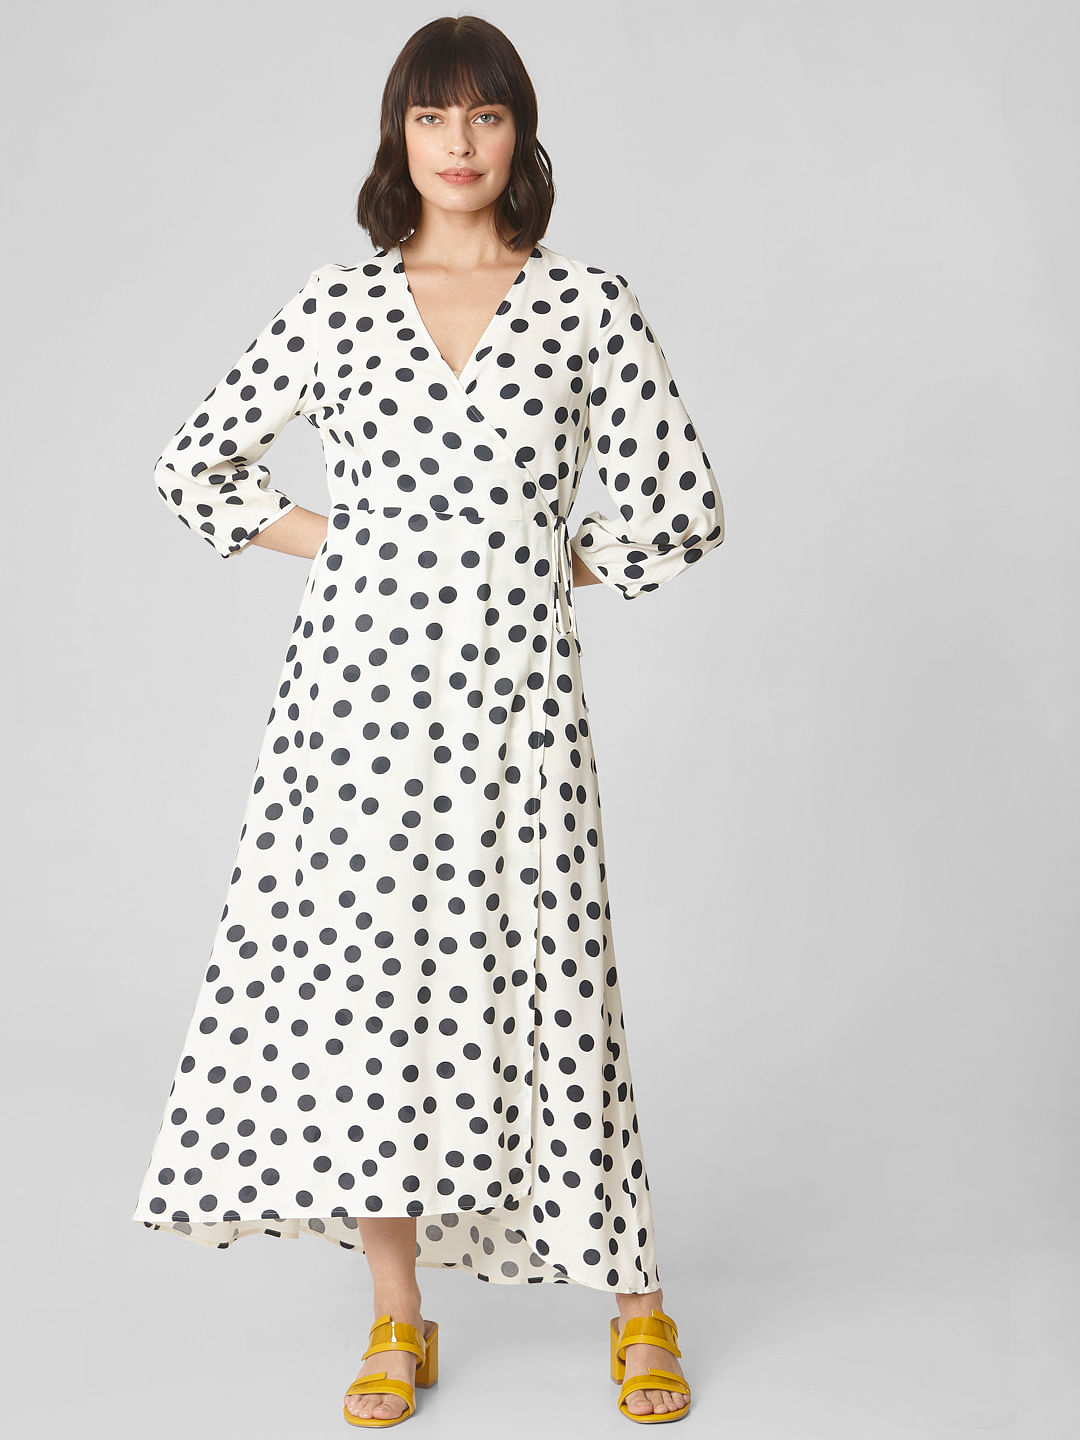 Wrap Dresses - Buy White Polka Dot Wrap Dress Online In India.